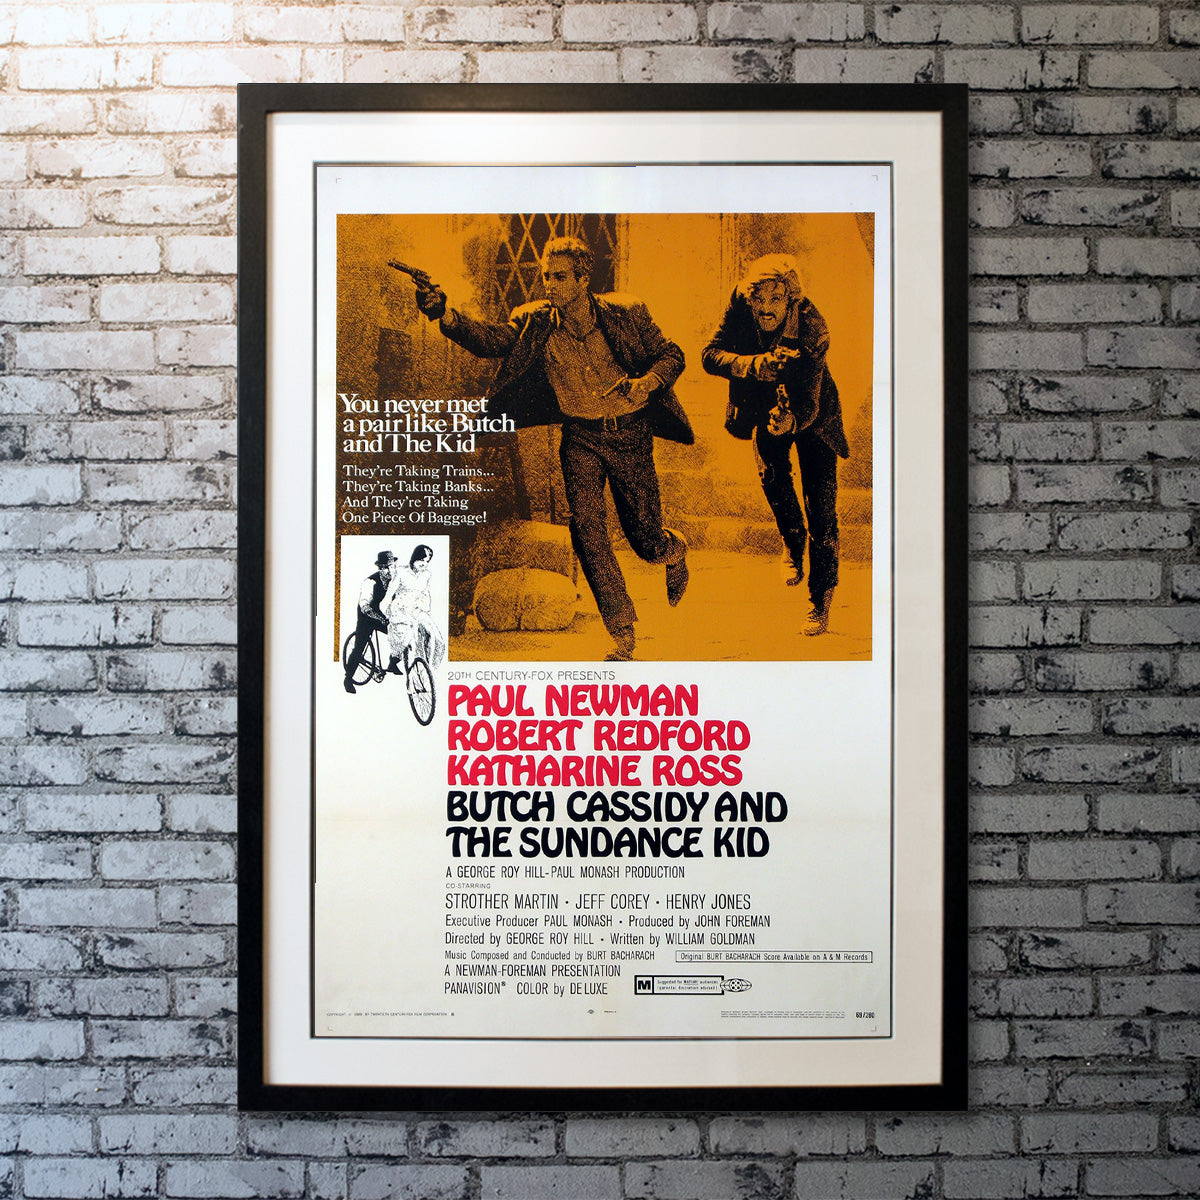 Butch Cassidy And The Sundance Kid (1969)